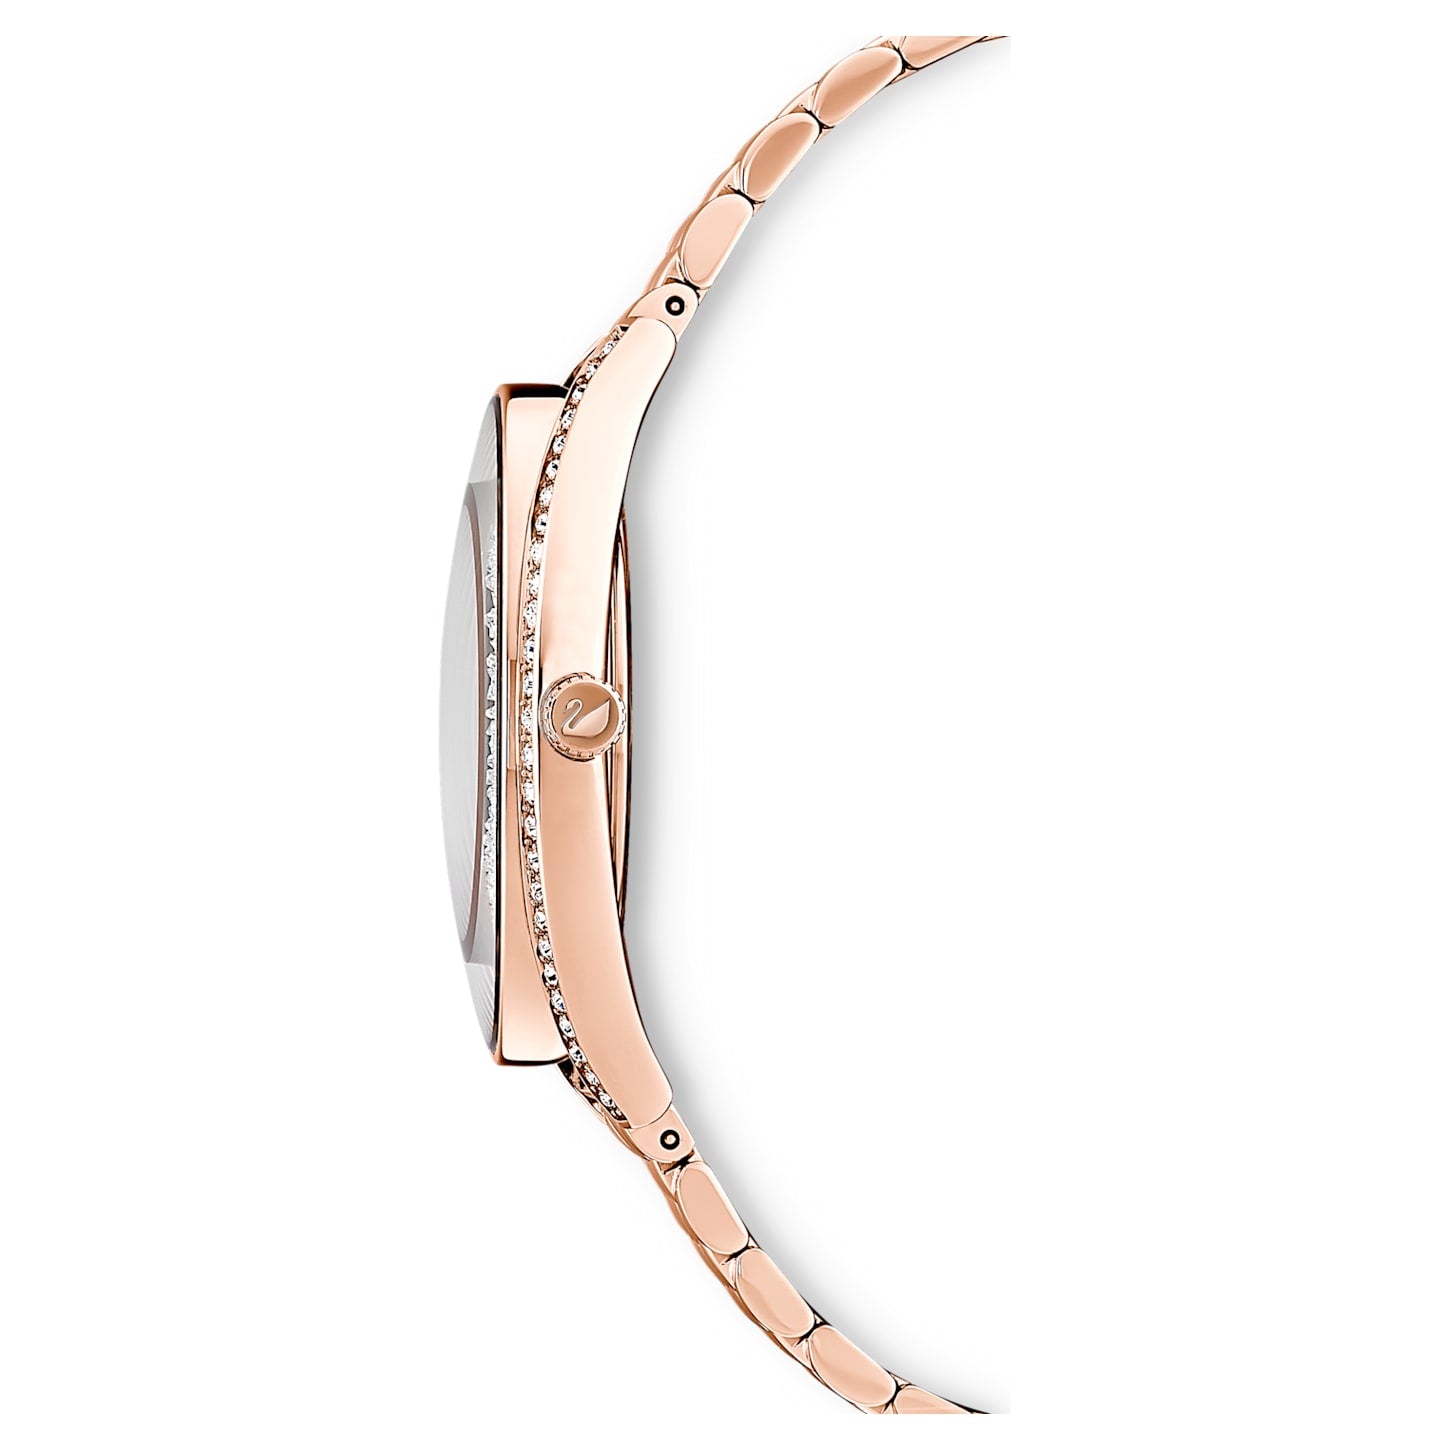 Crystalline Aura watch Swiss Made, Metal bracelet, Rose gold tone, Ros